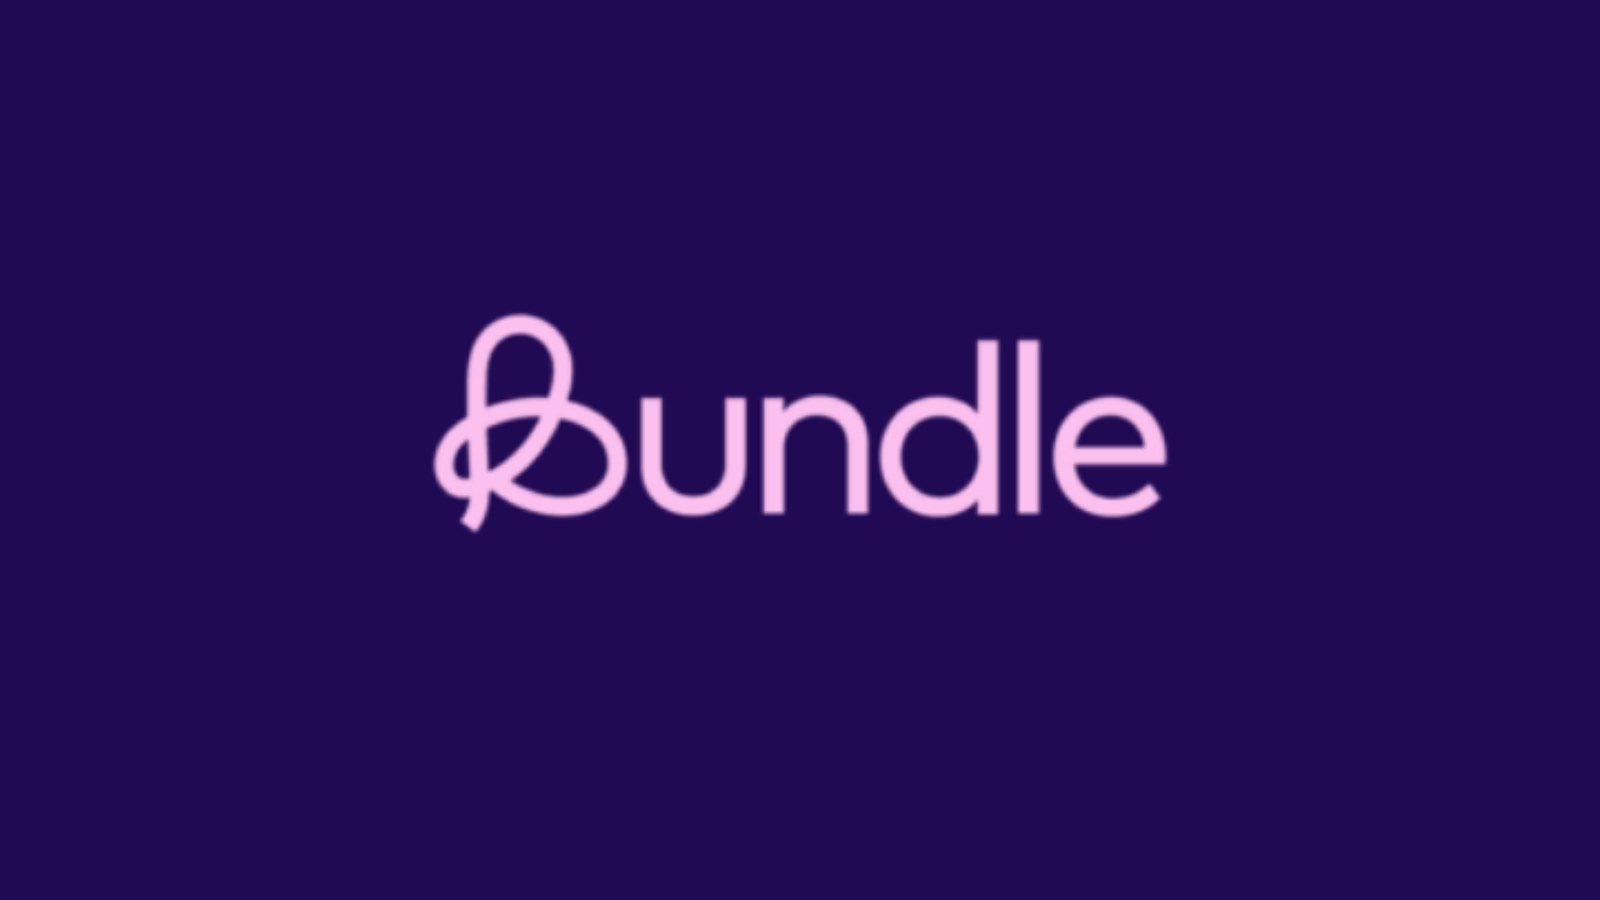 Bundle app logo on dark background to save in dollars in Nigeria